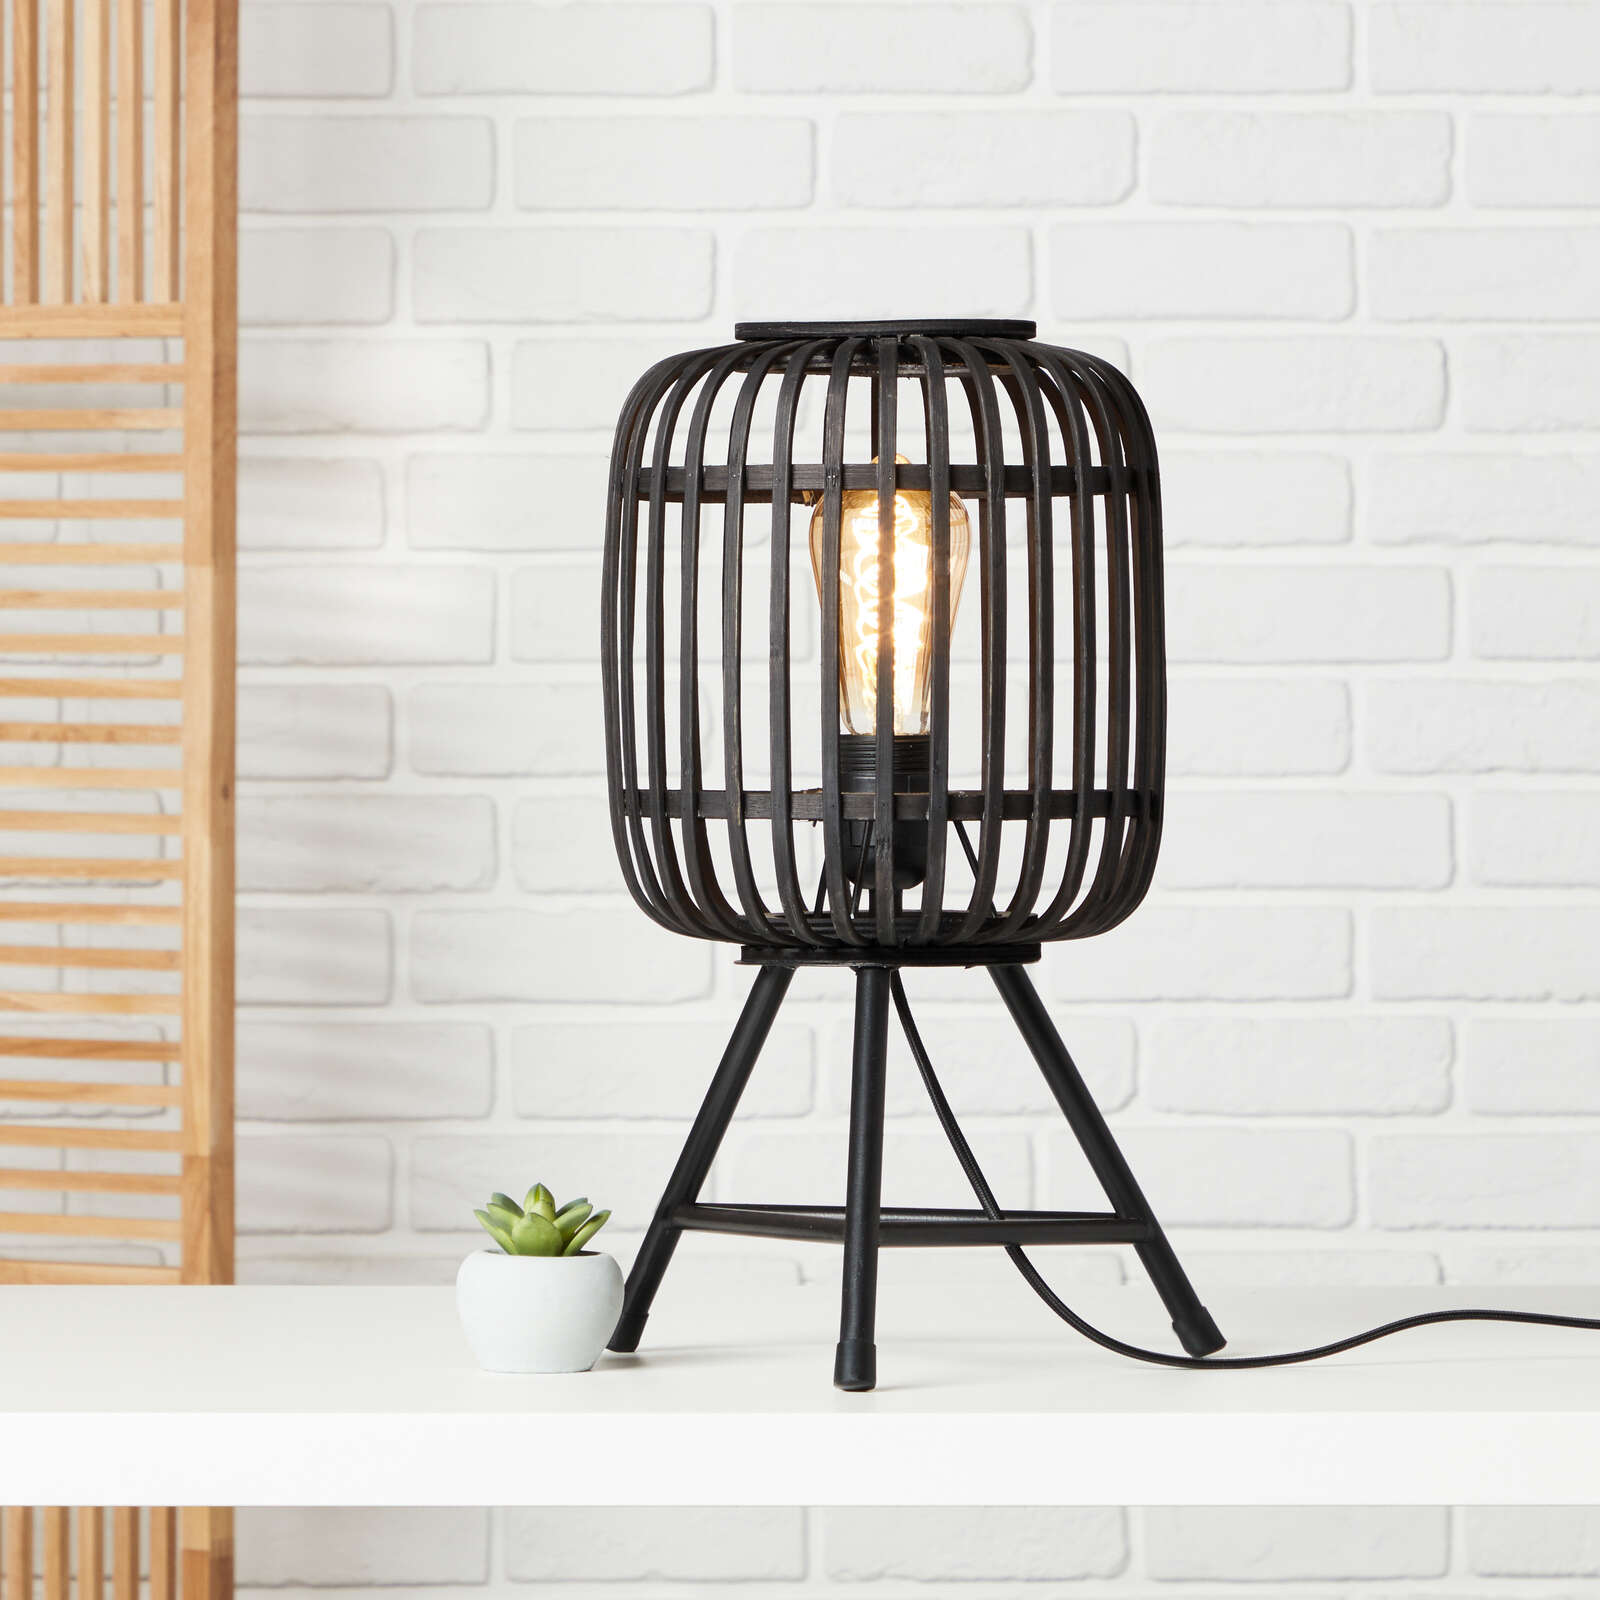             Lampe de table en bambou - Willi 3 - Marron
        